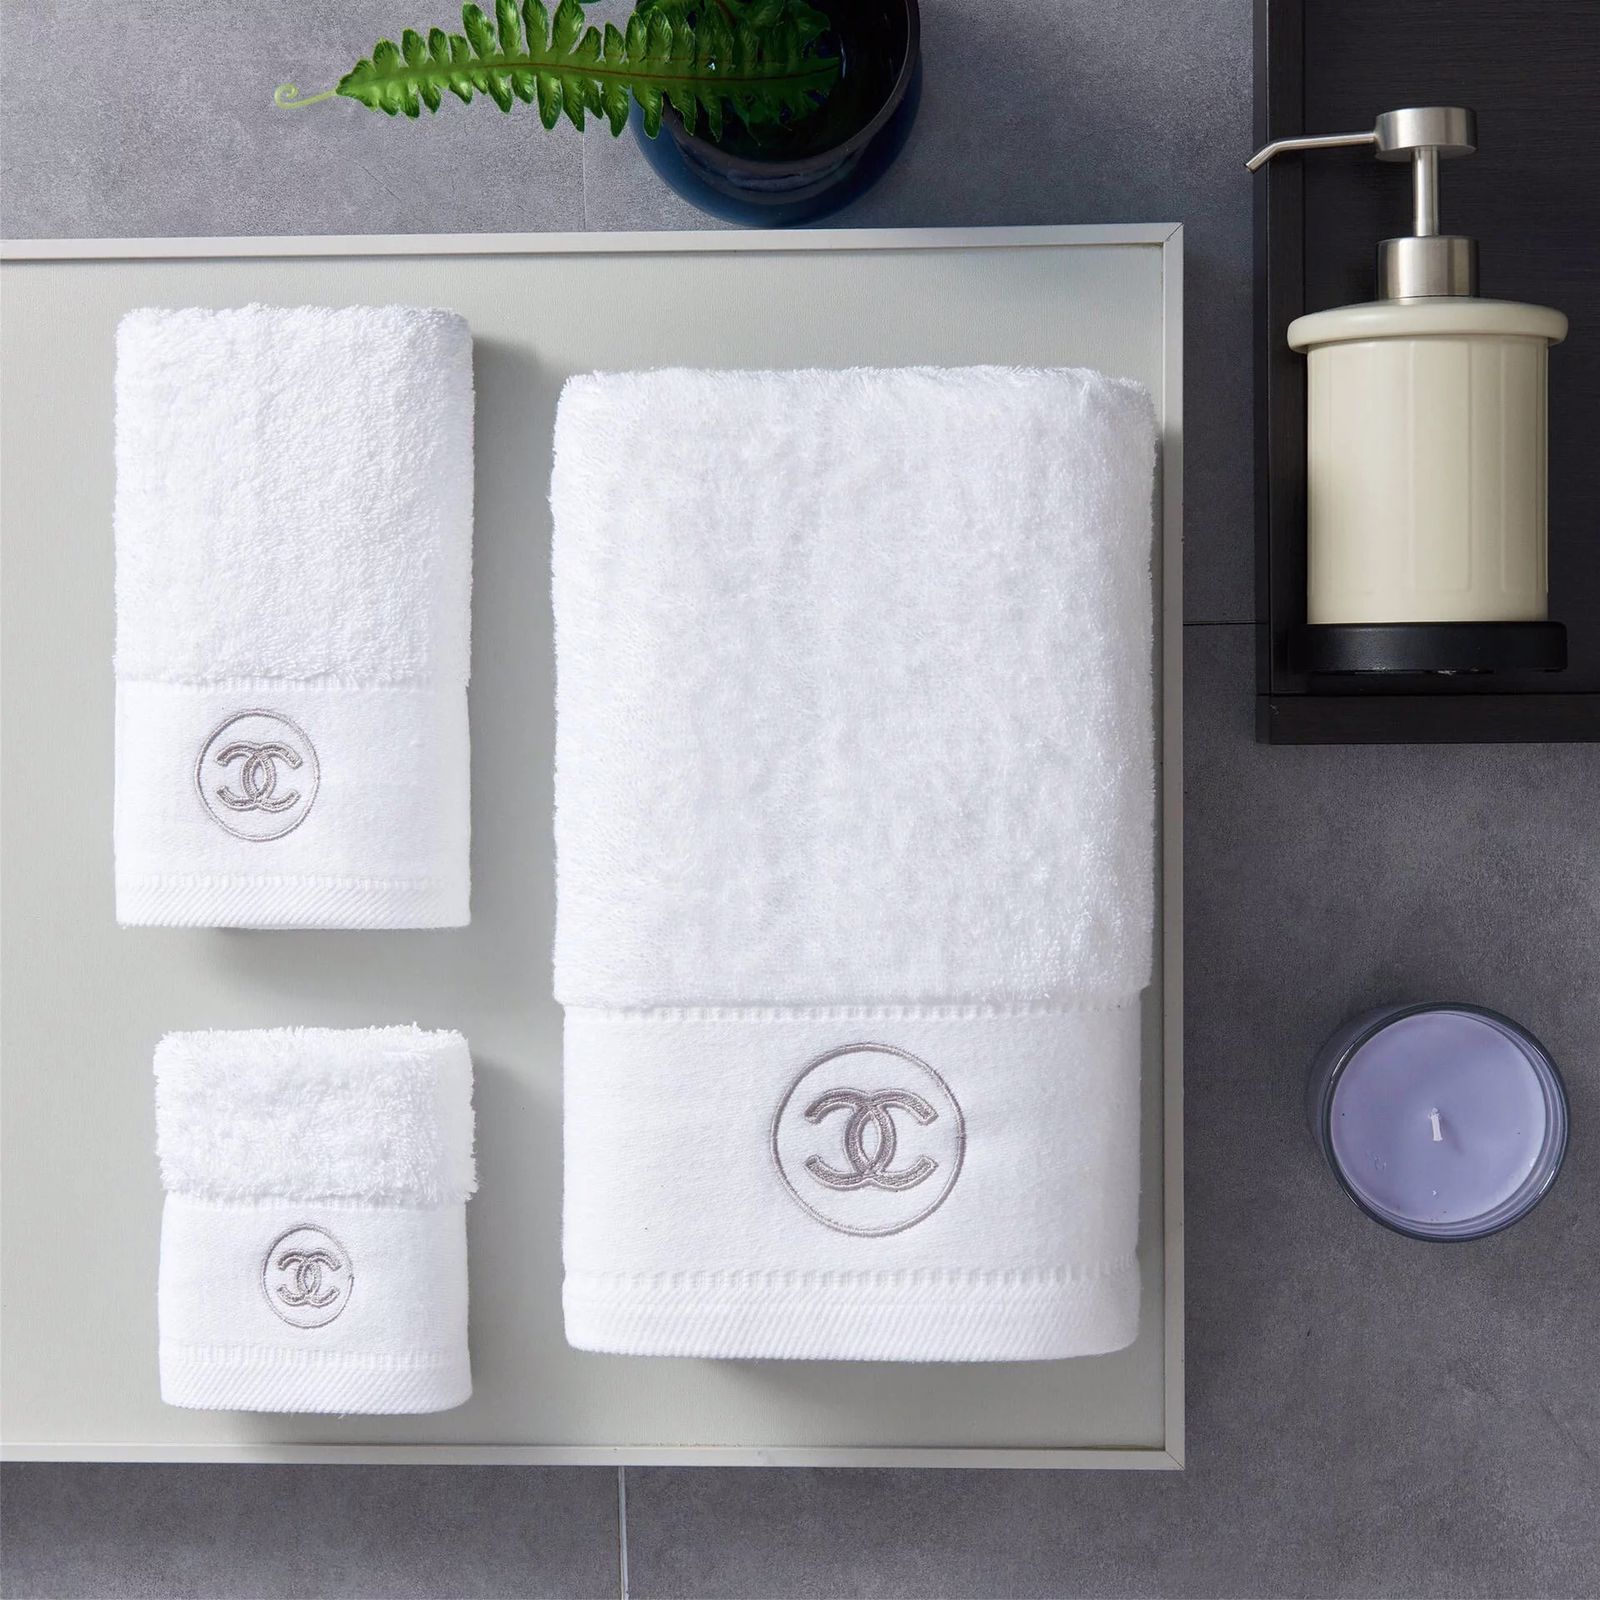 Best Premium Chanel Towel Set in Bangladesh